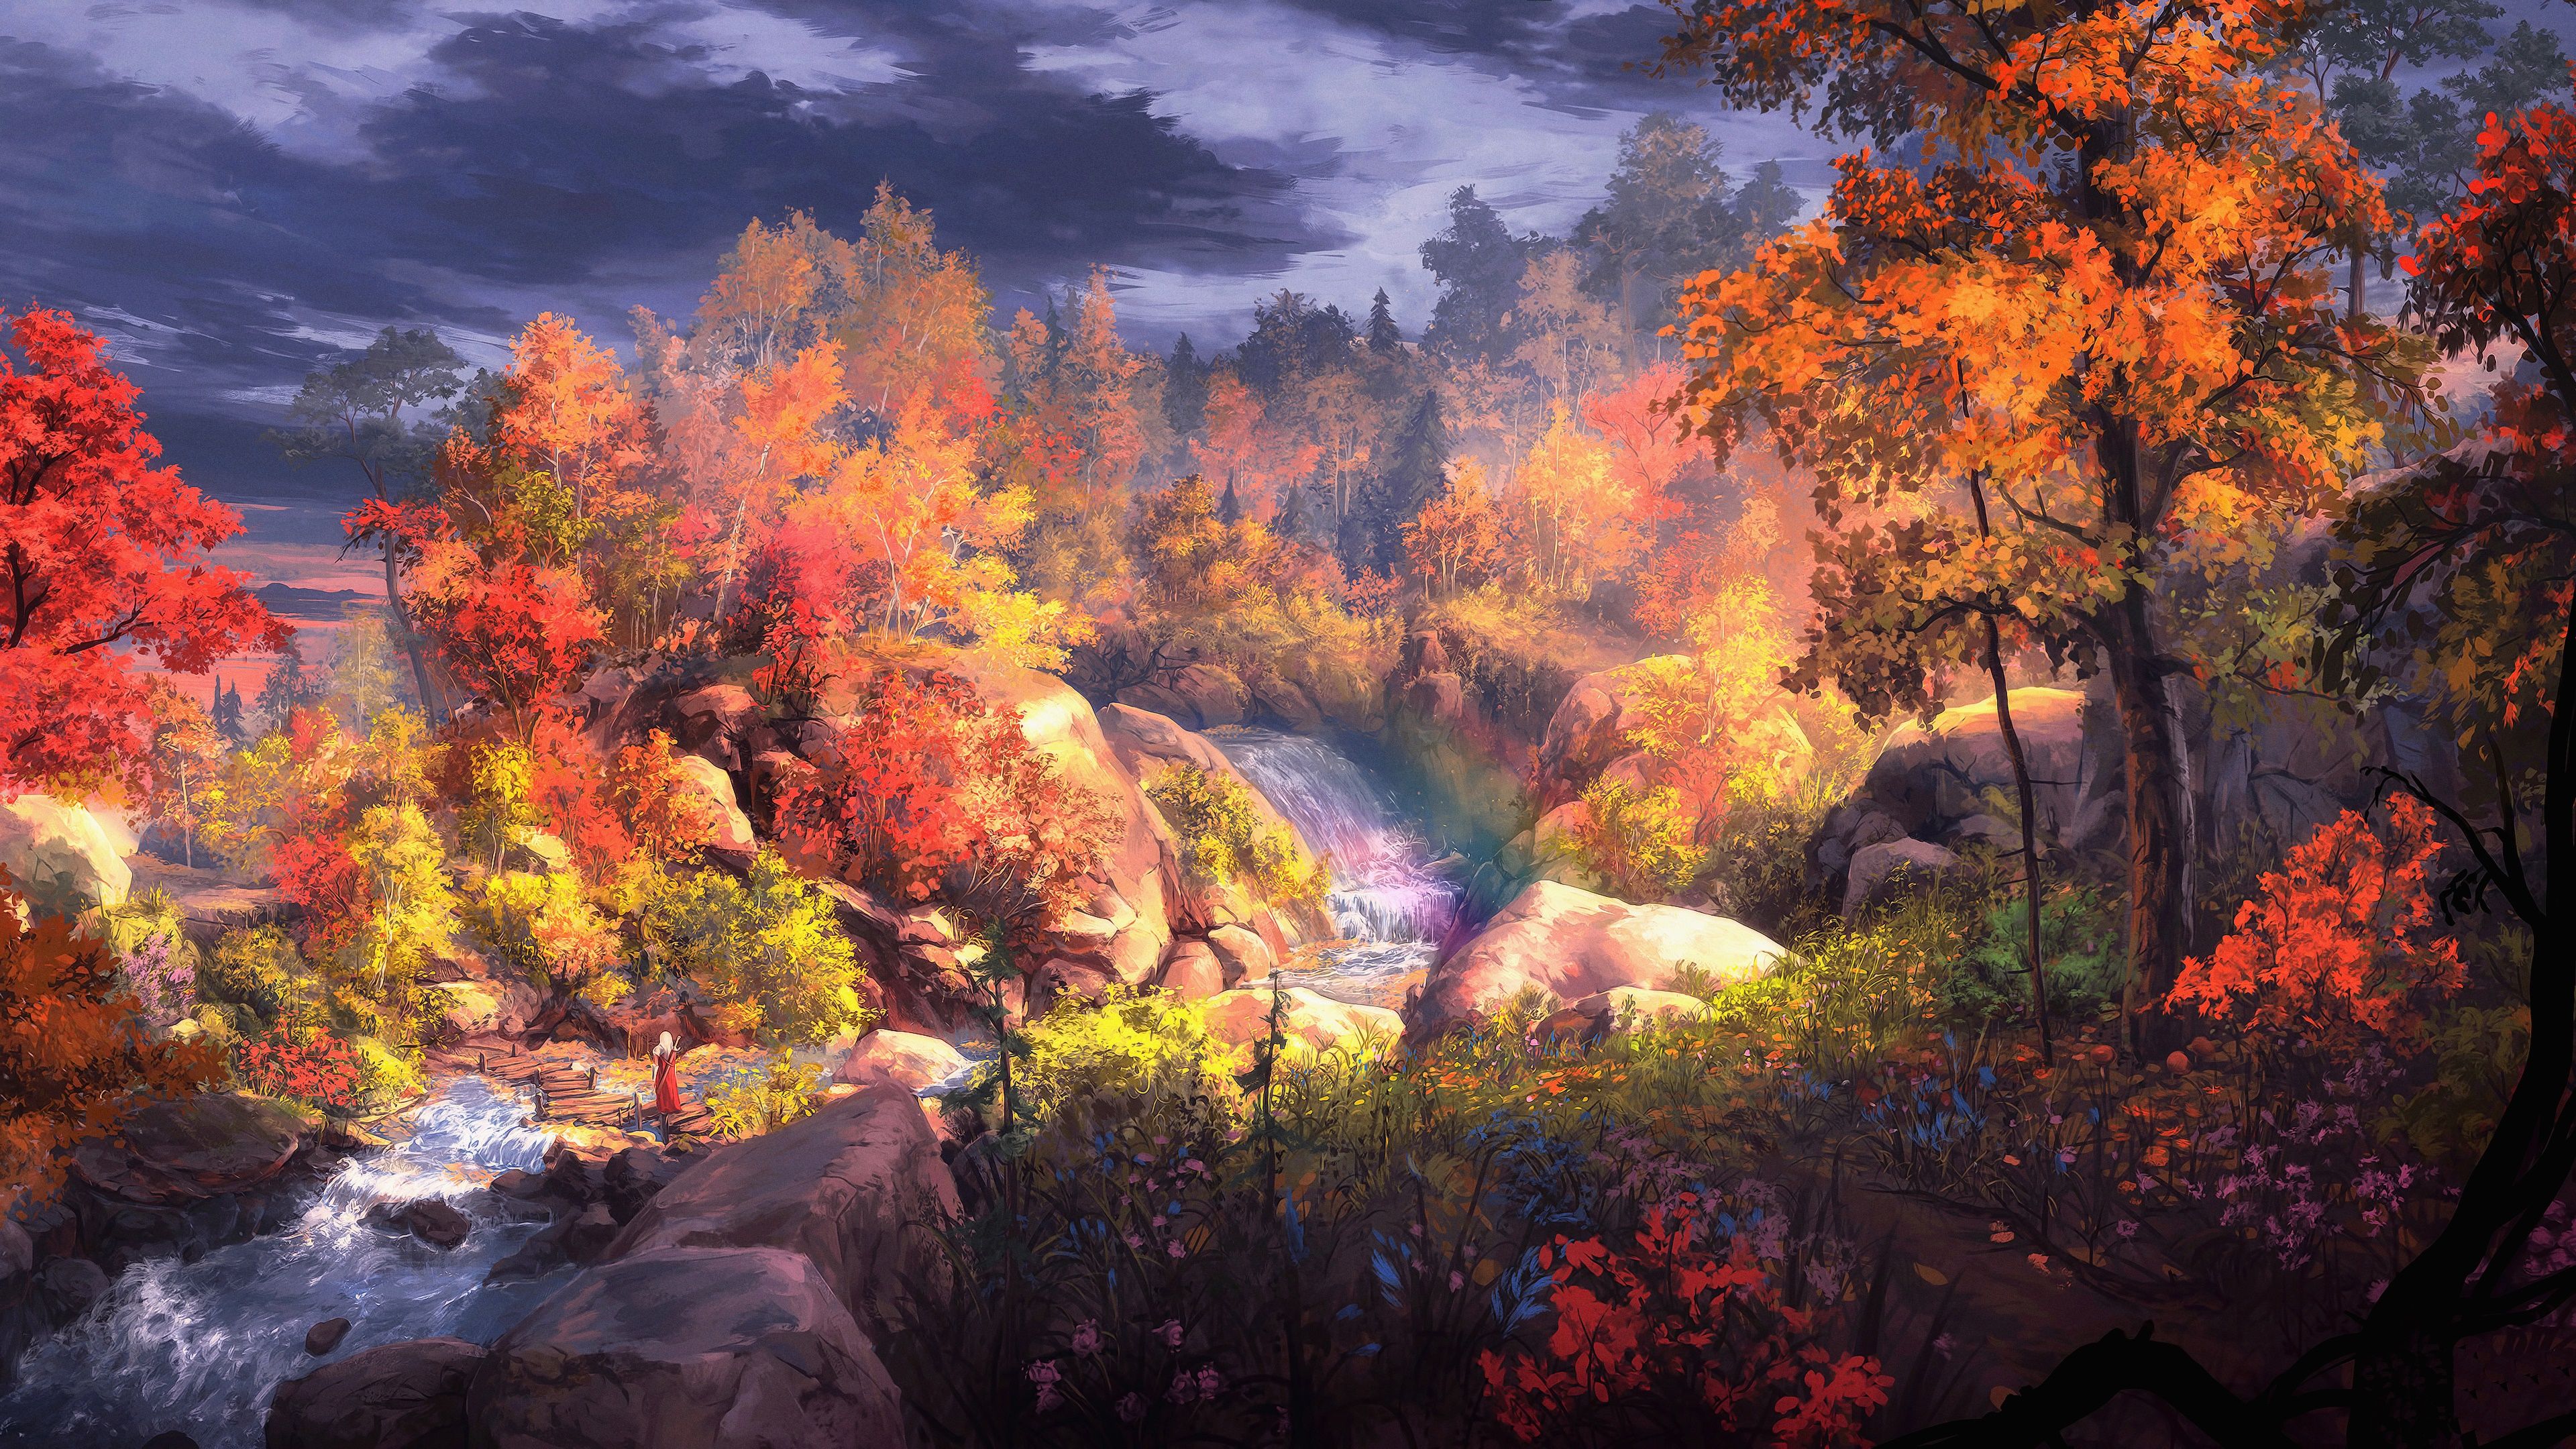 Misty Autumn River 4k Ultra HD Wallpaper. Background Image